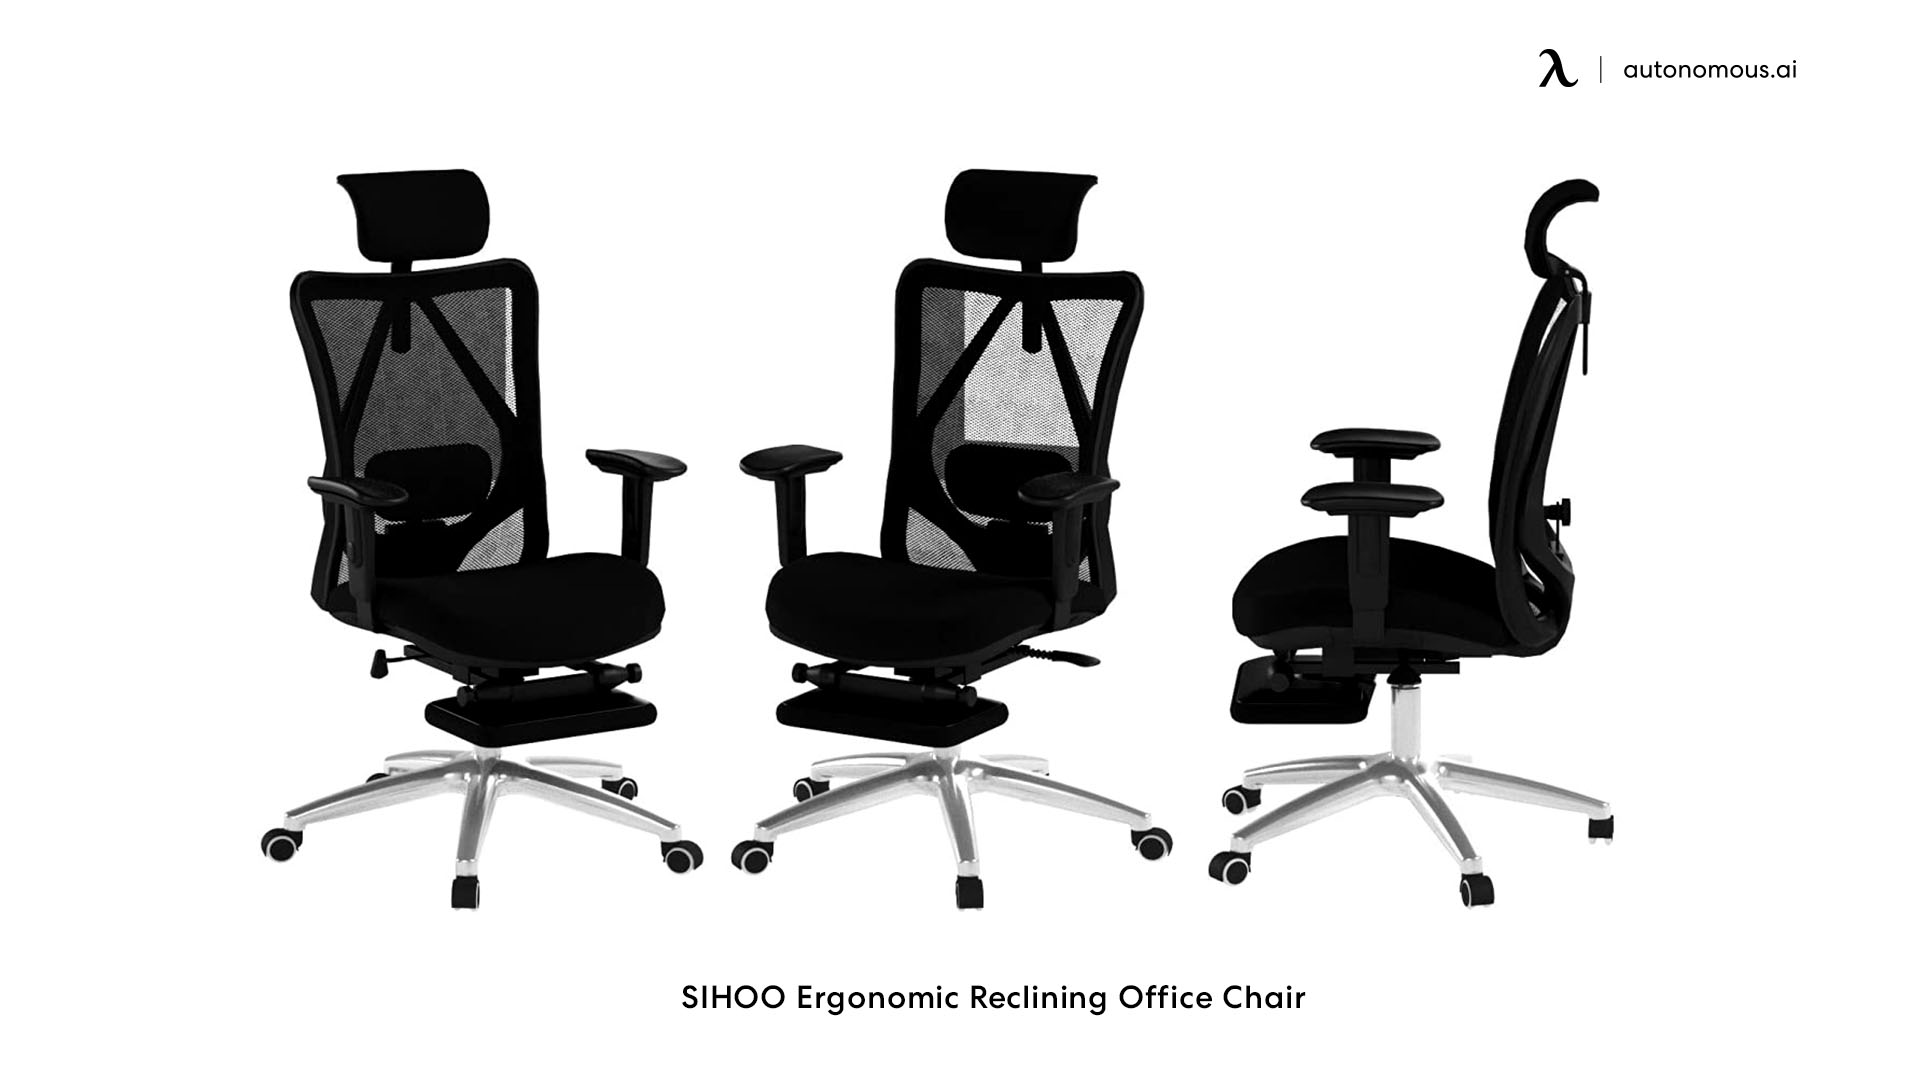 SIHOO colored desk chairs